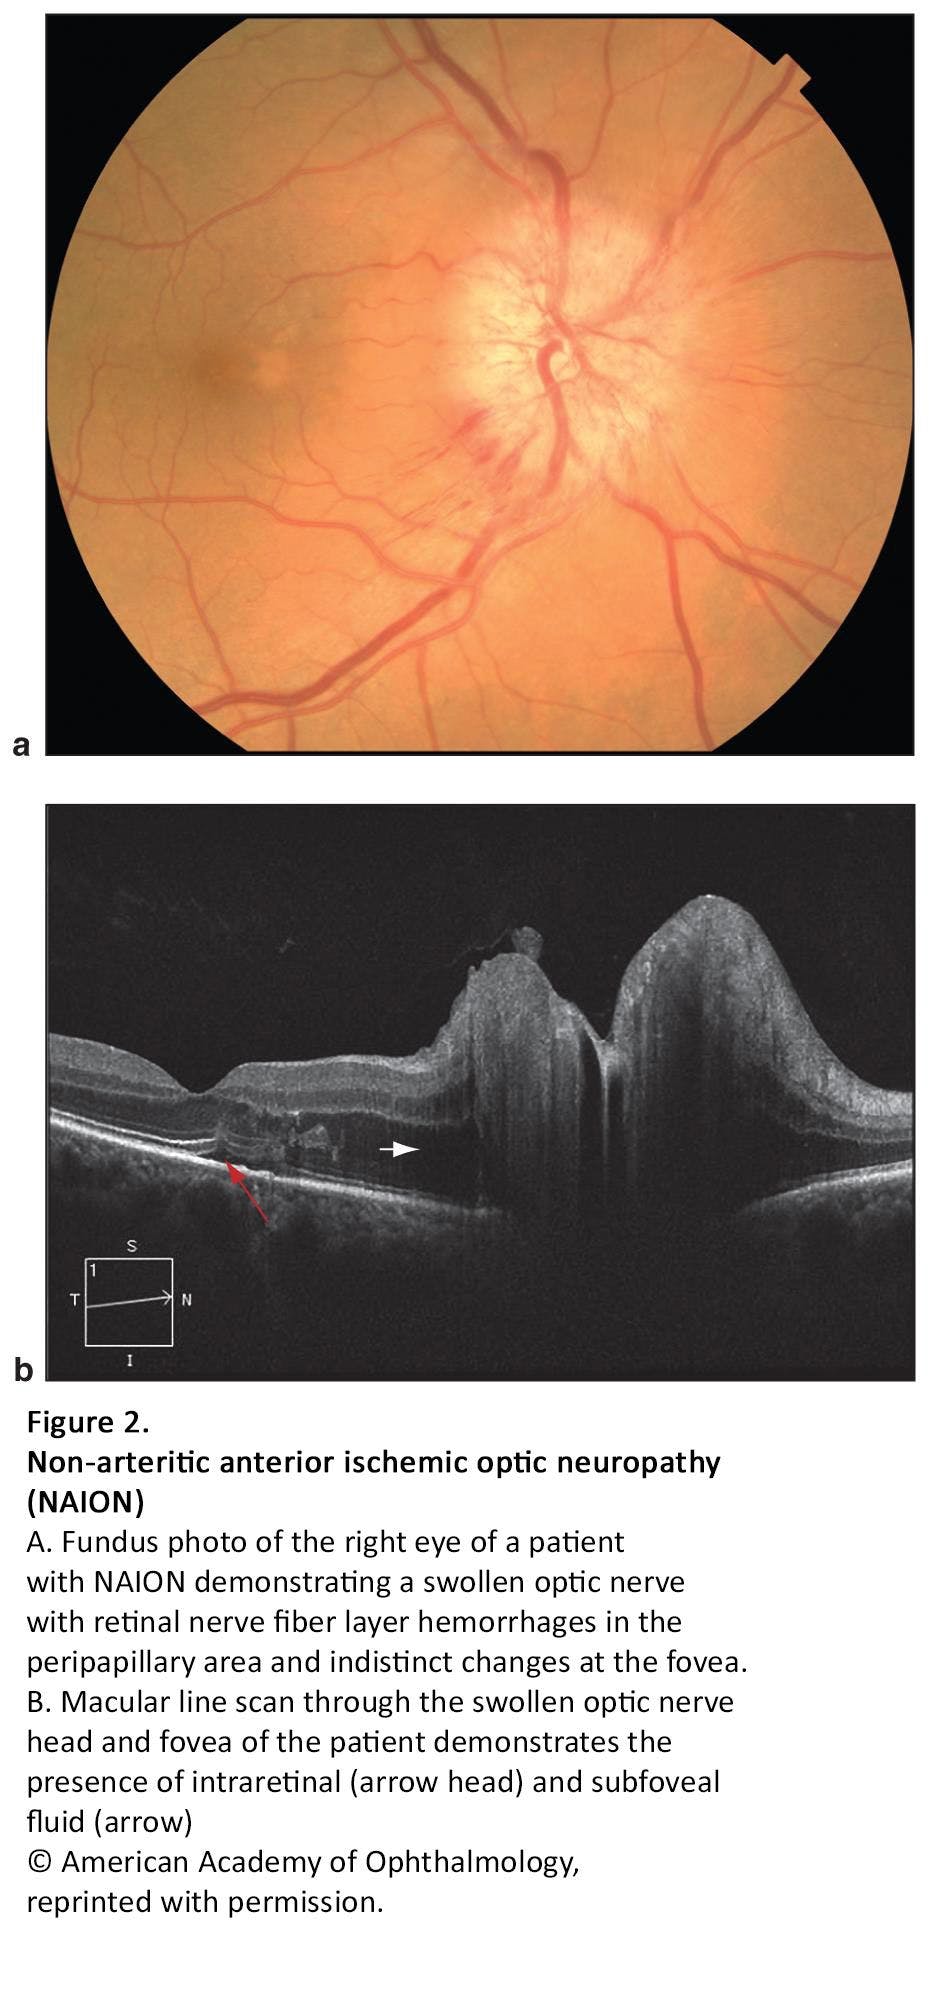 Figure 2. Non-arteritic anterior ischemic optic neuropathy (NAION)